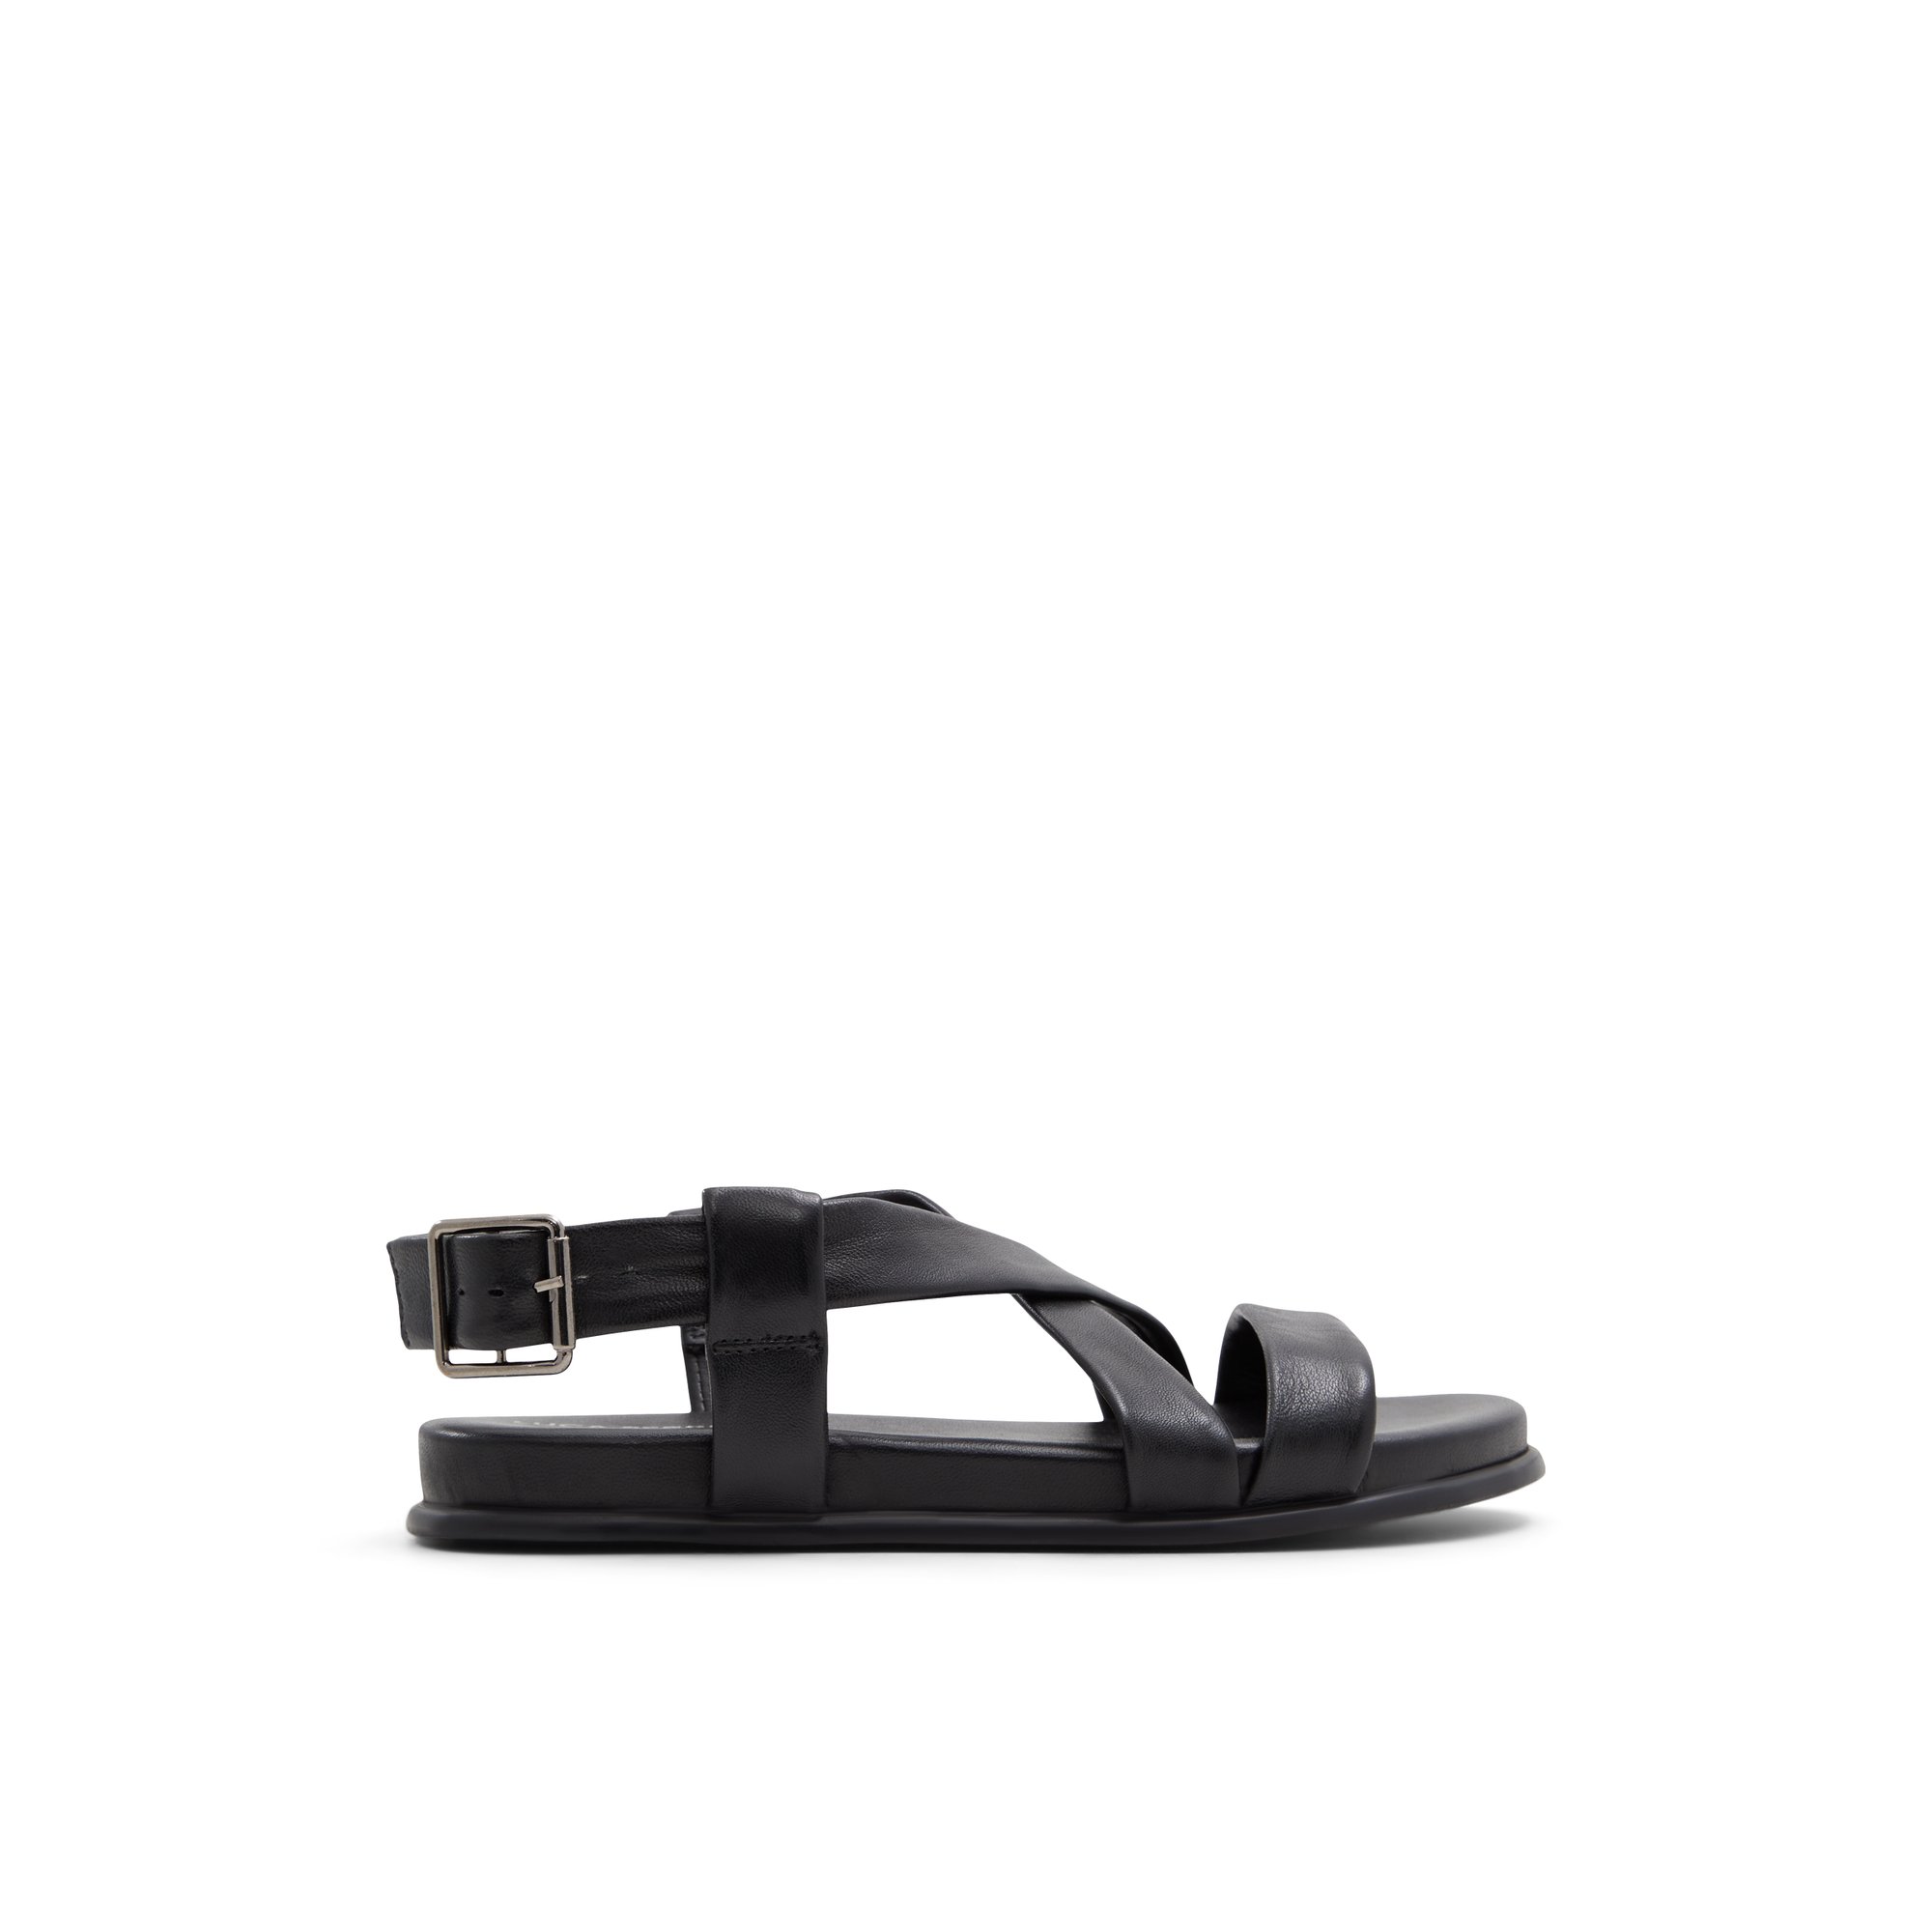 Luca Ferri Gnowellen - Women's Footwear Sandals Flats